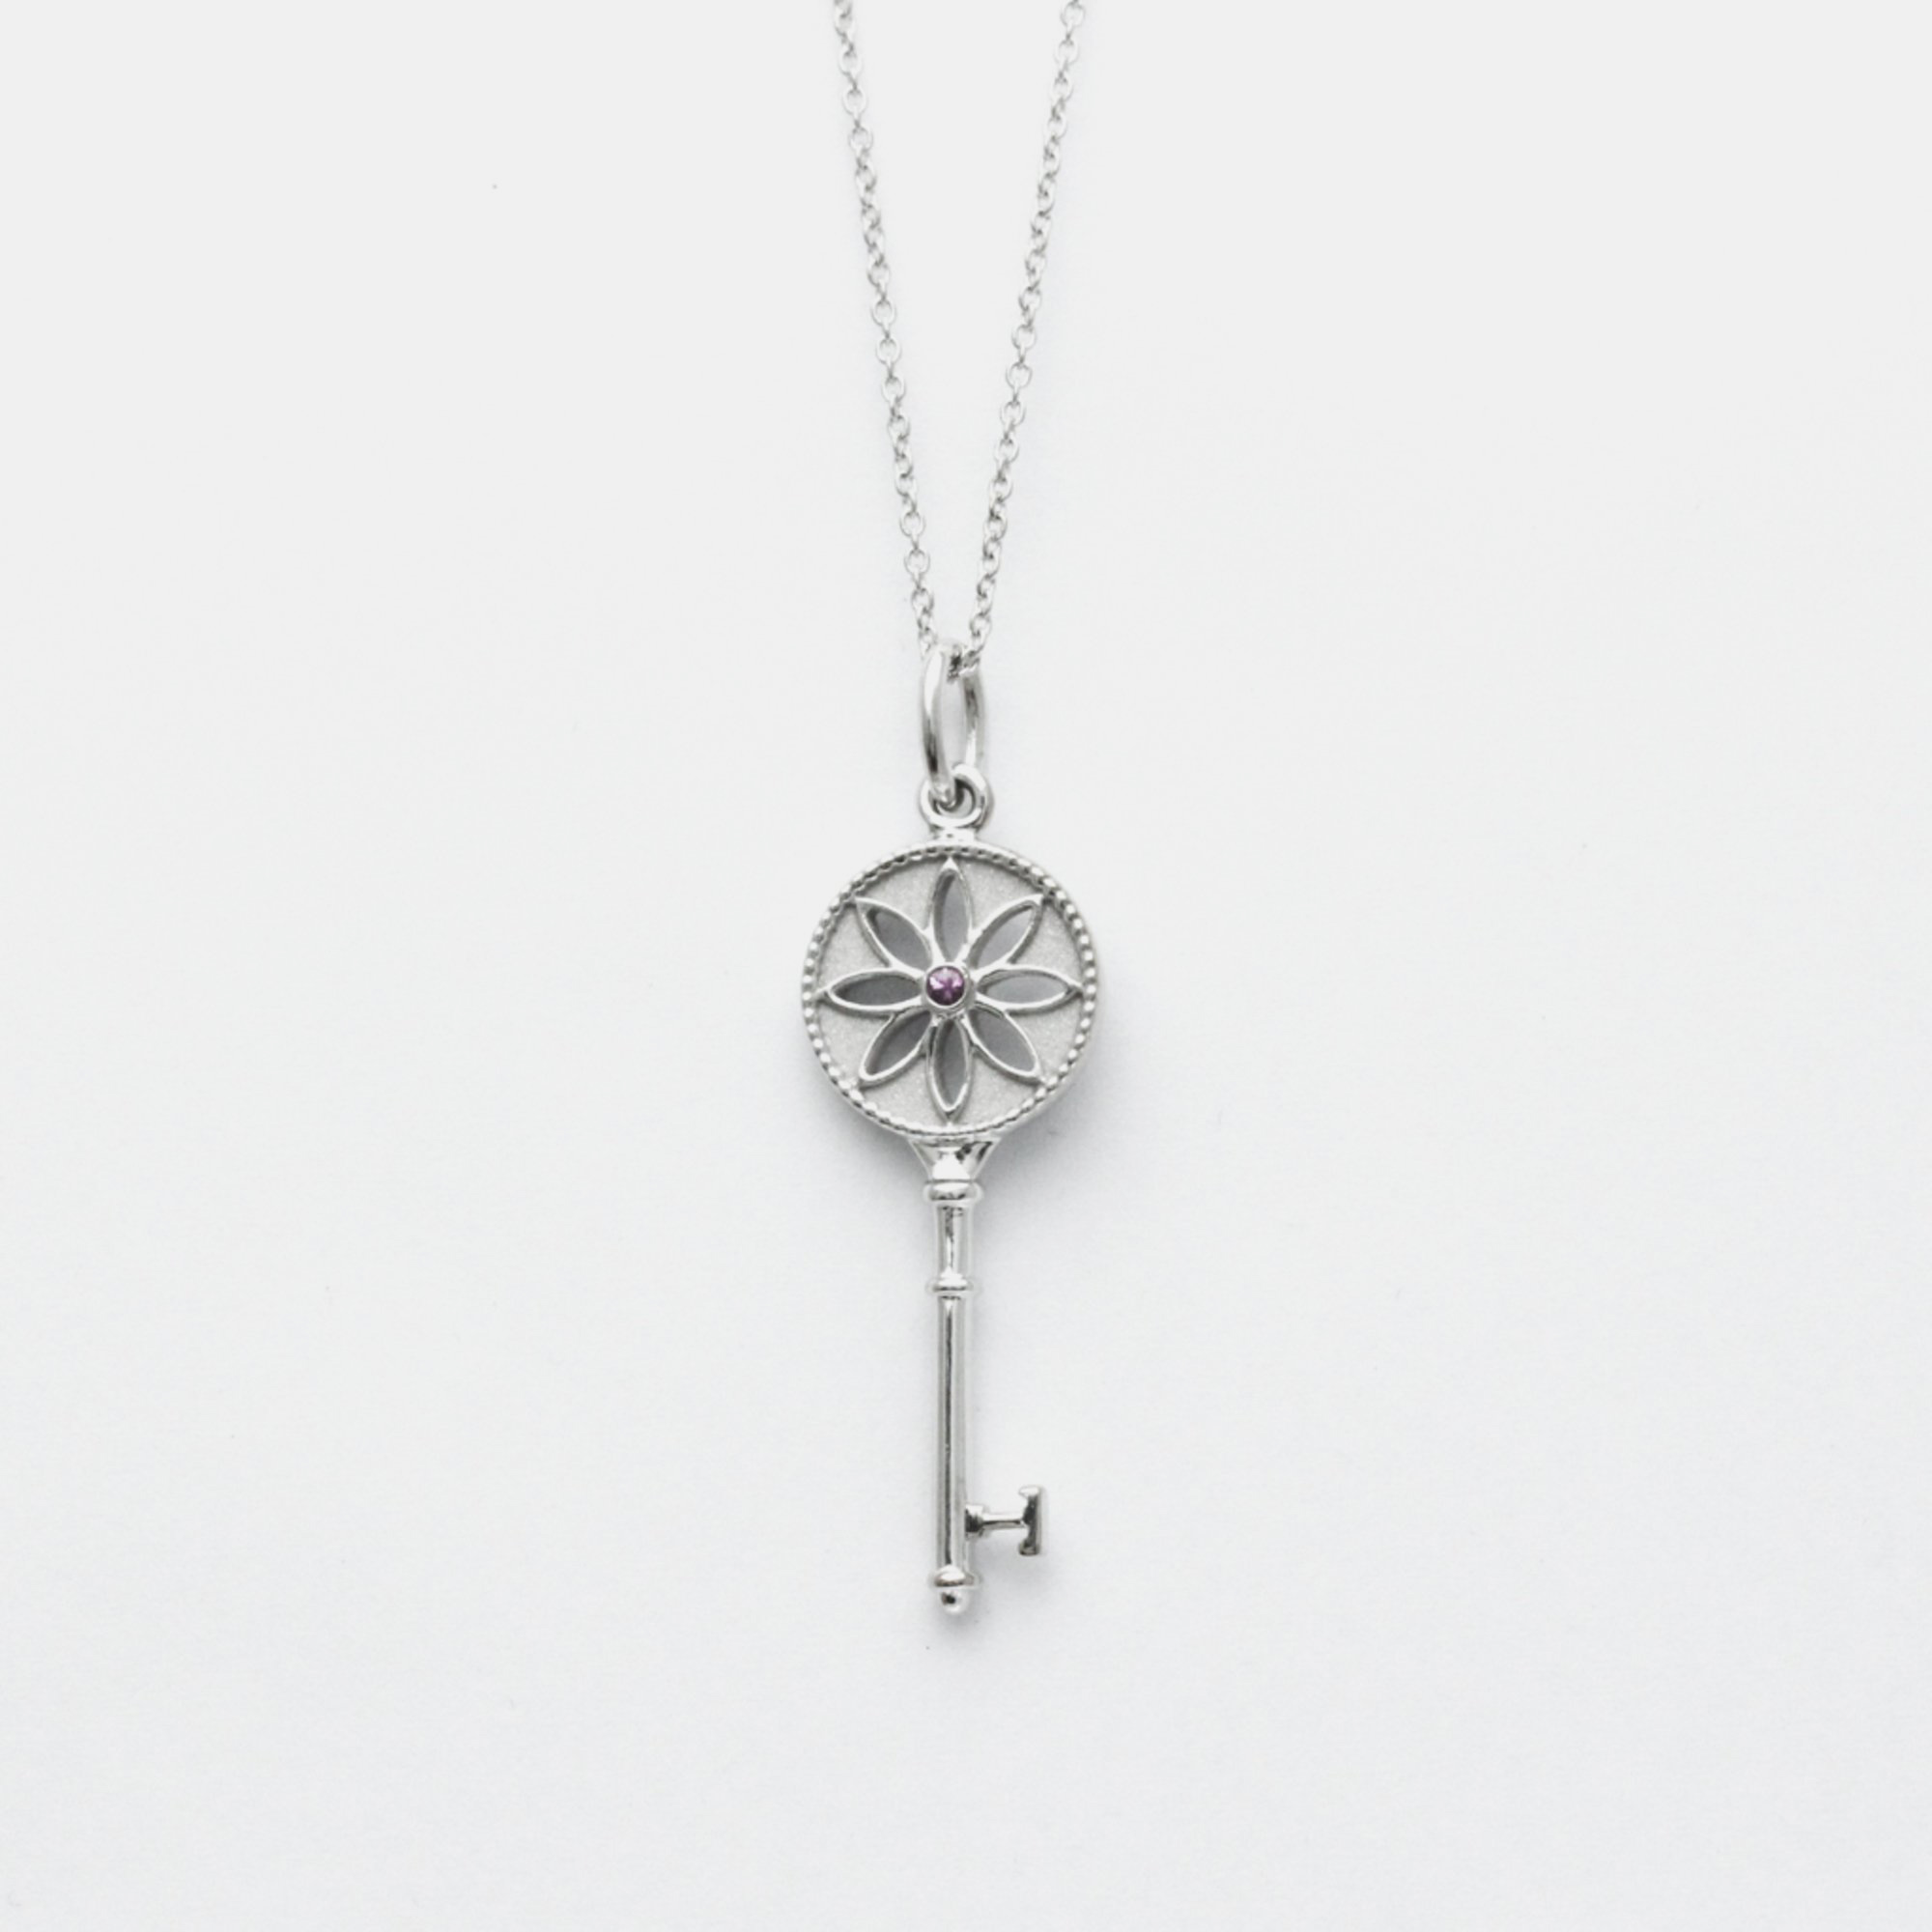 Tiffany & co. 18k white gold and sapphire daisy key pendant necklace